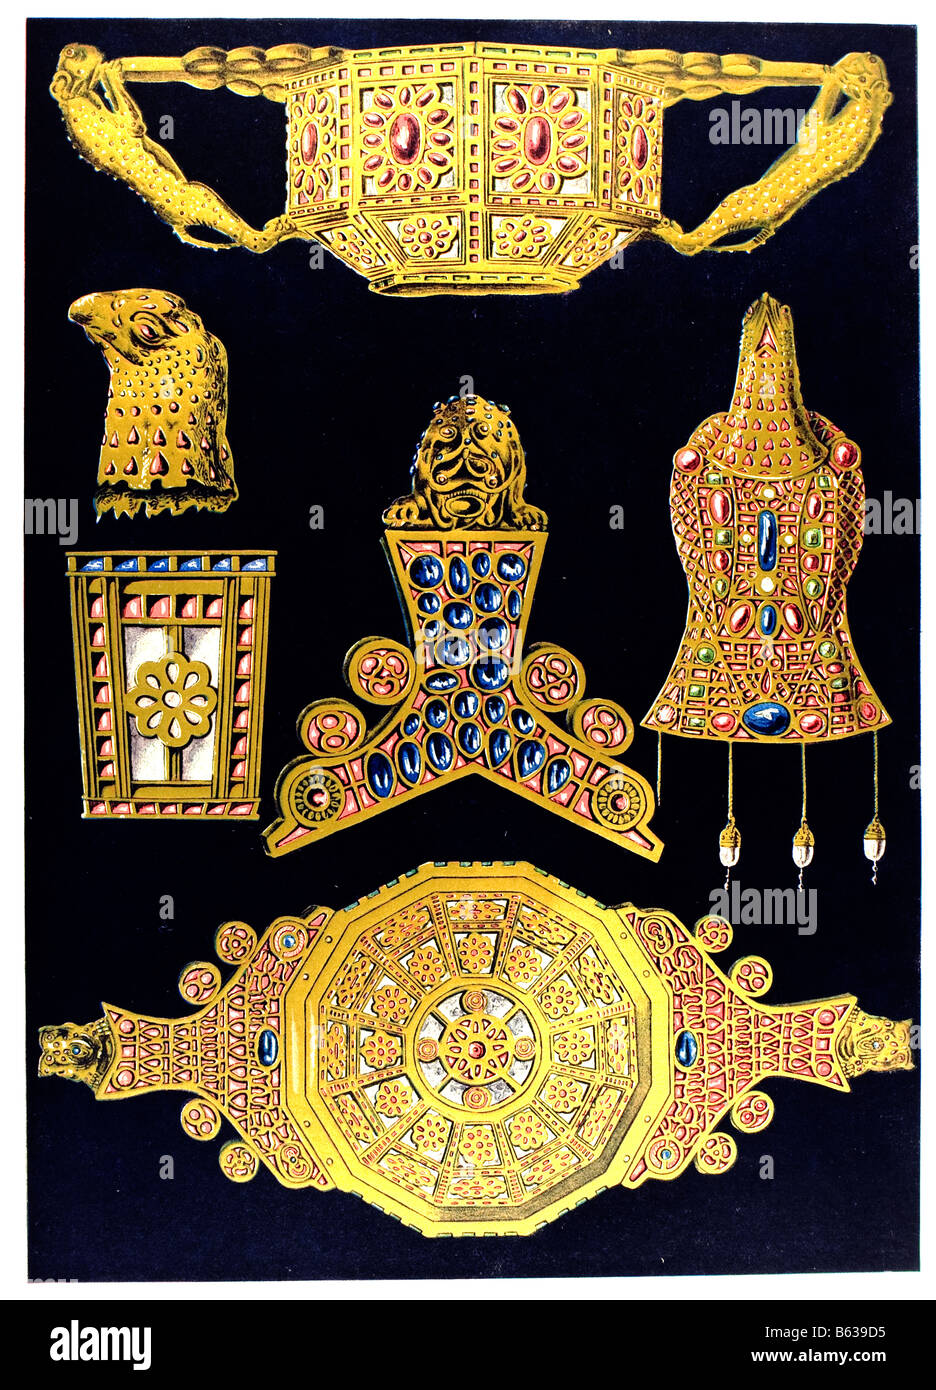 The Late Greek Ornament / Treasure of Petrosa. (Linas, Les origines de I'orfevrerie cloisonnee.) Stock Photo